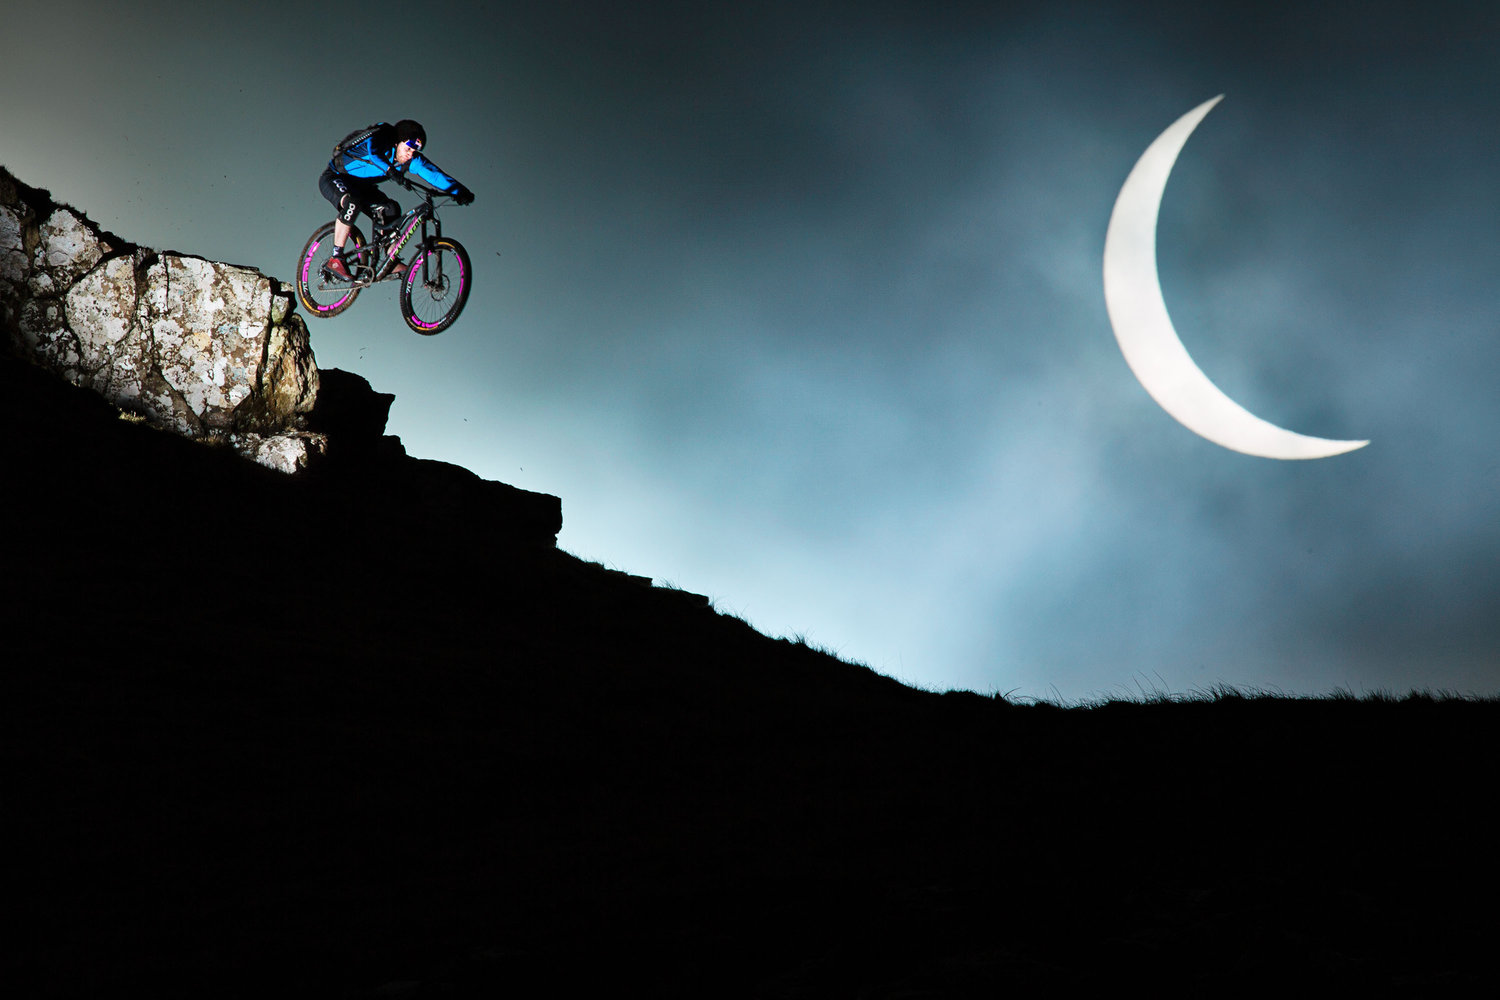 Danny Macaskill – Riding the eclipse